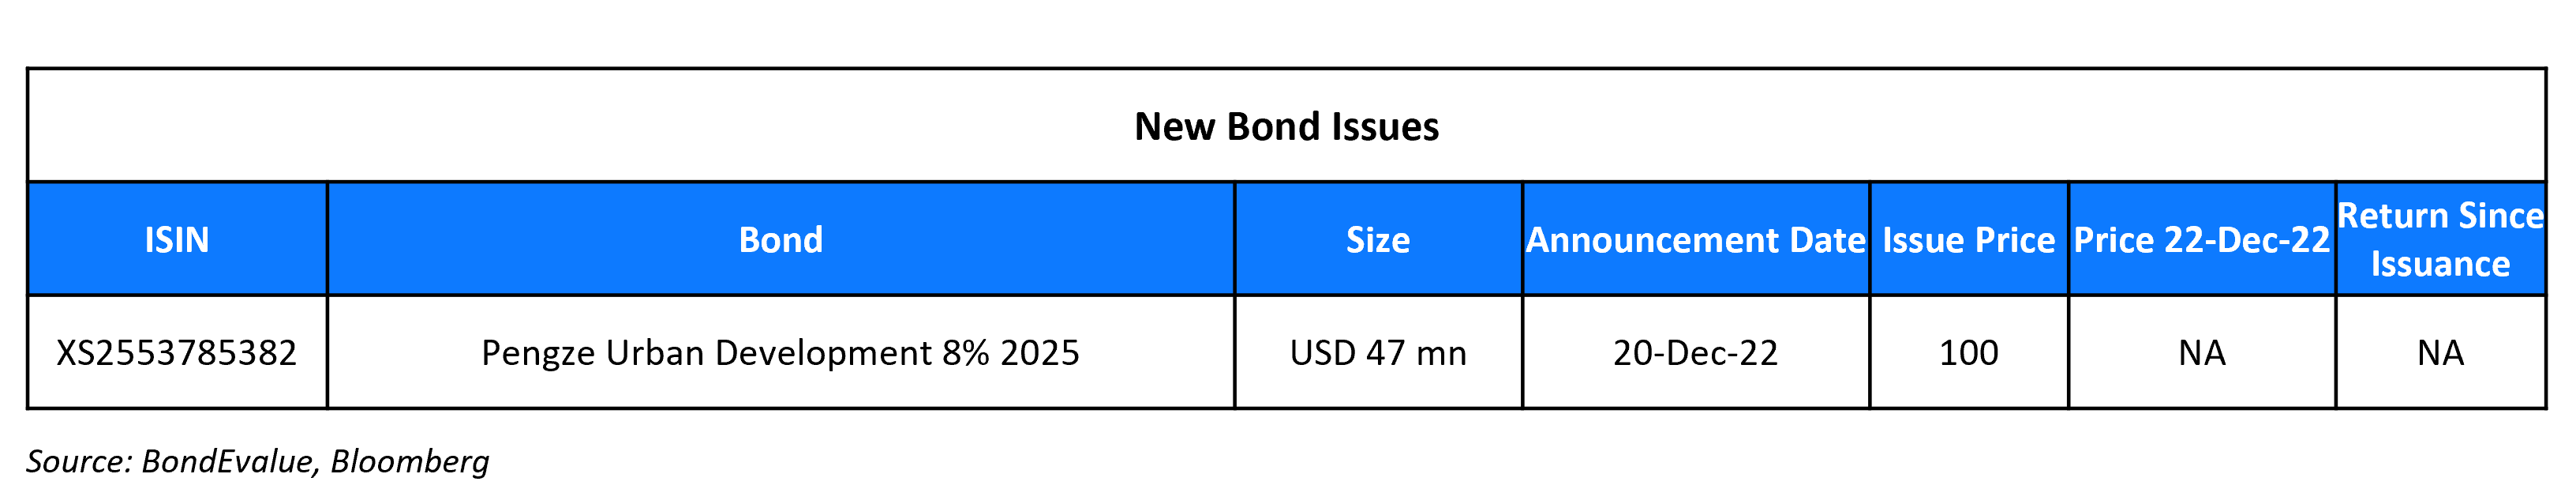 New Bond Issues 22 Dec 22